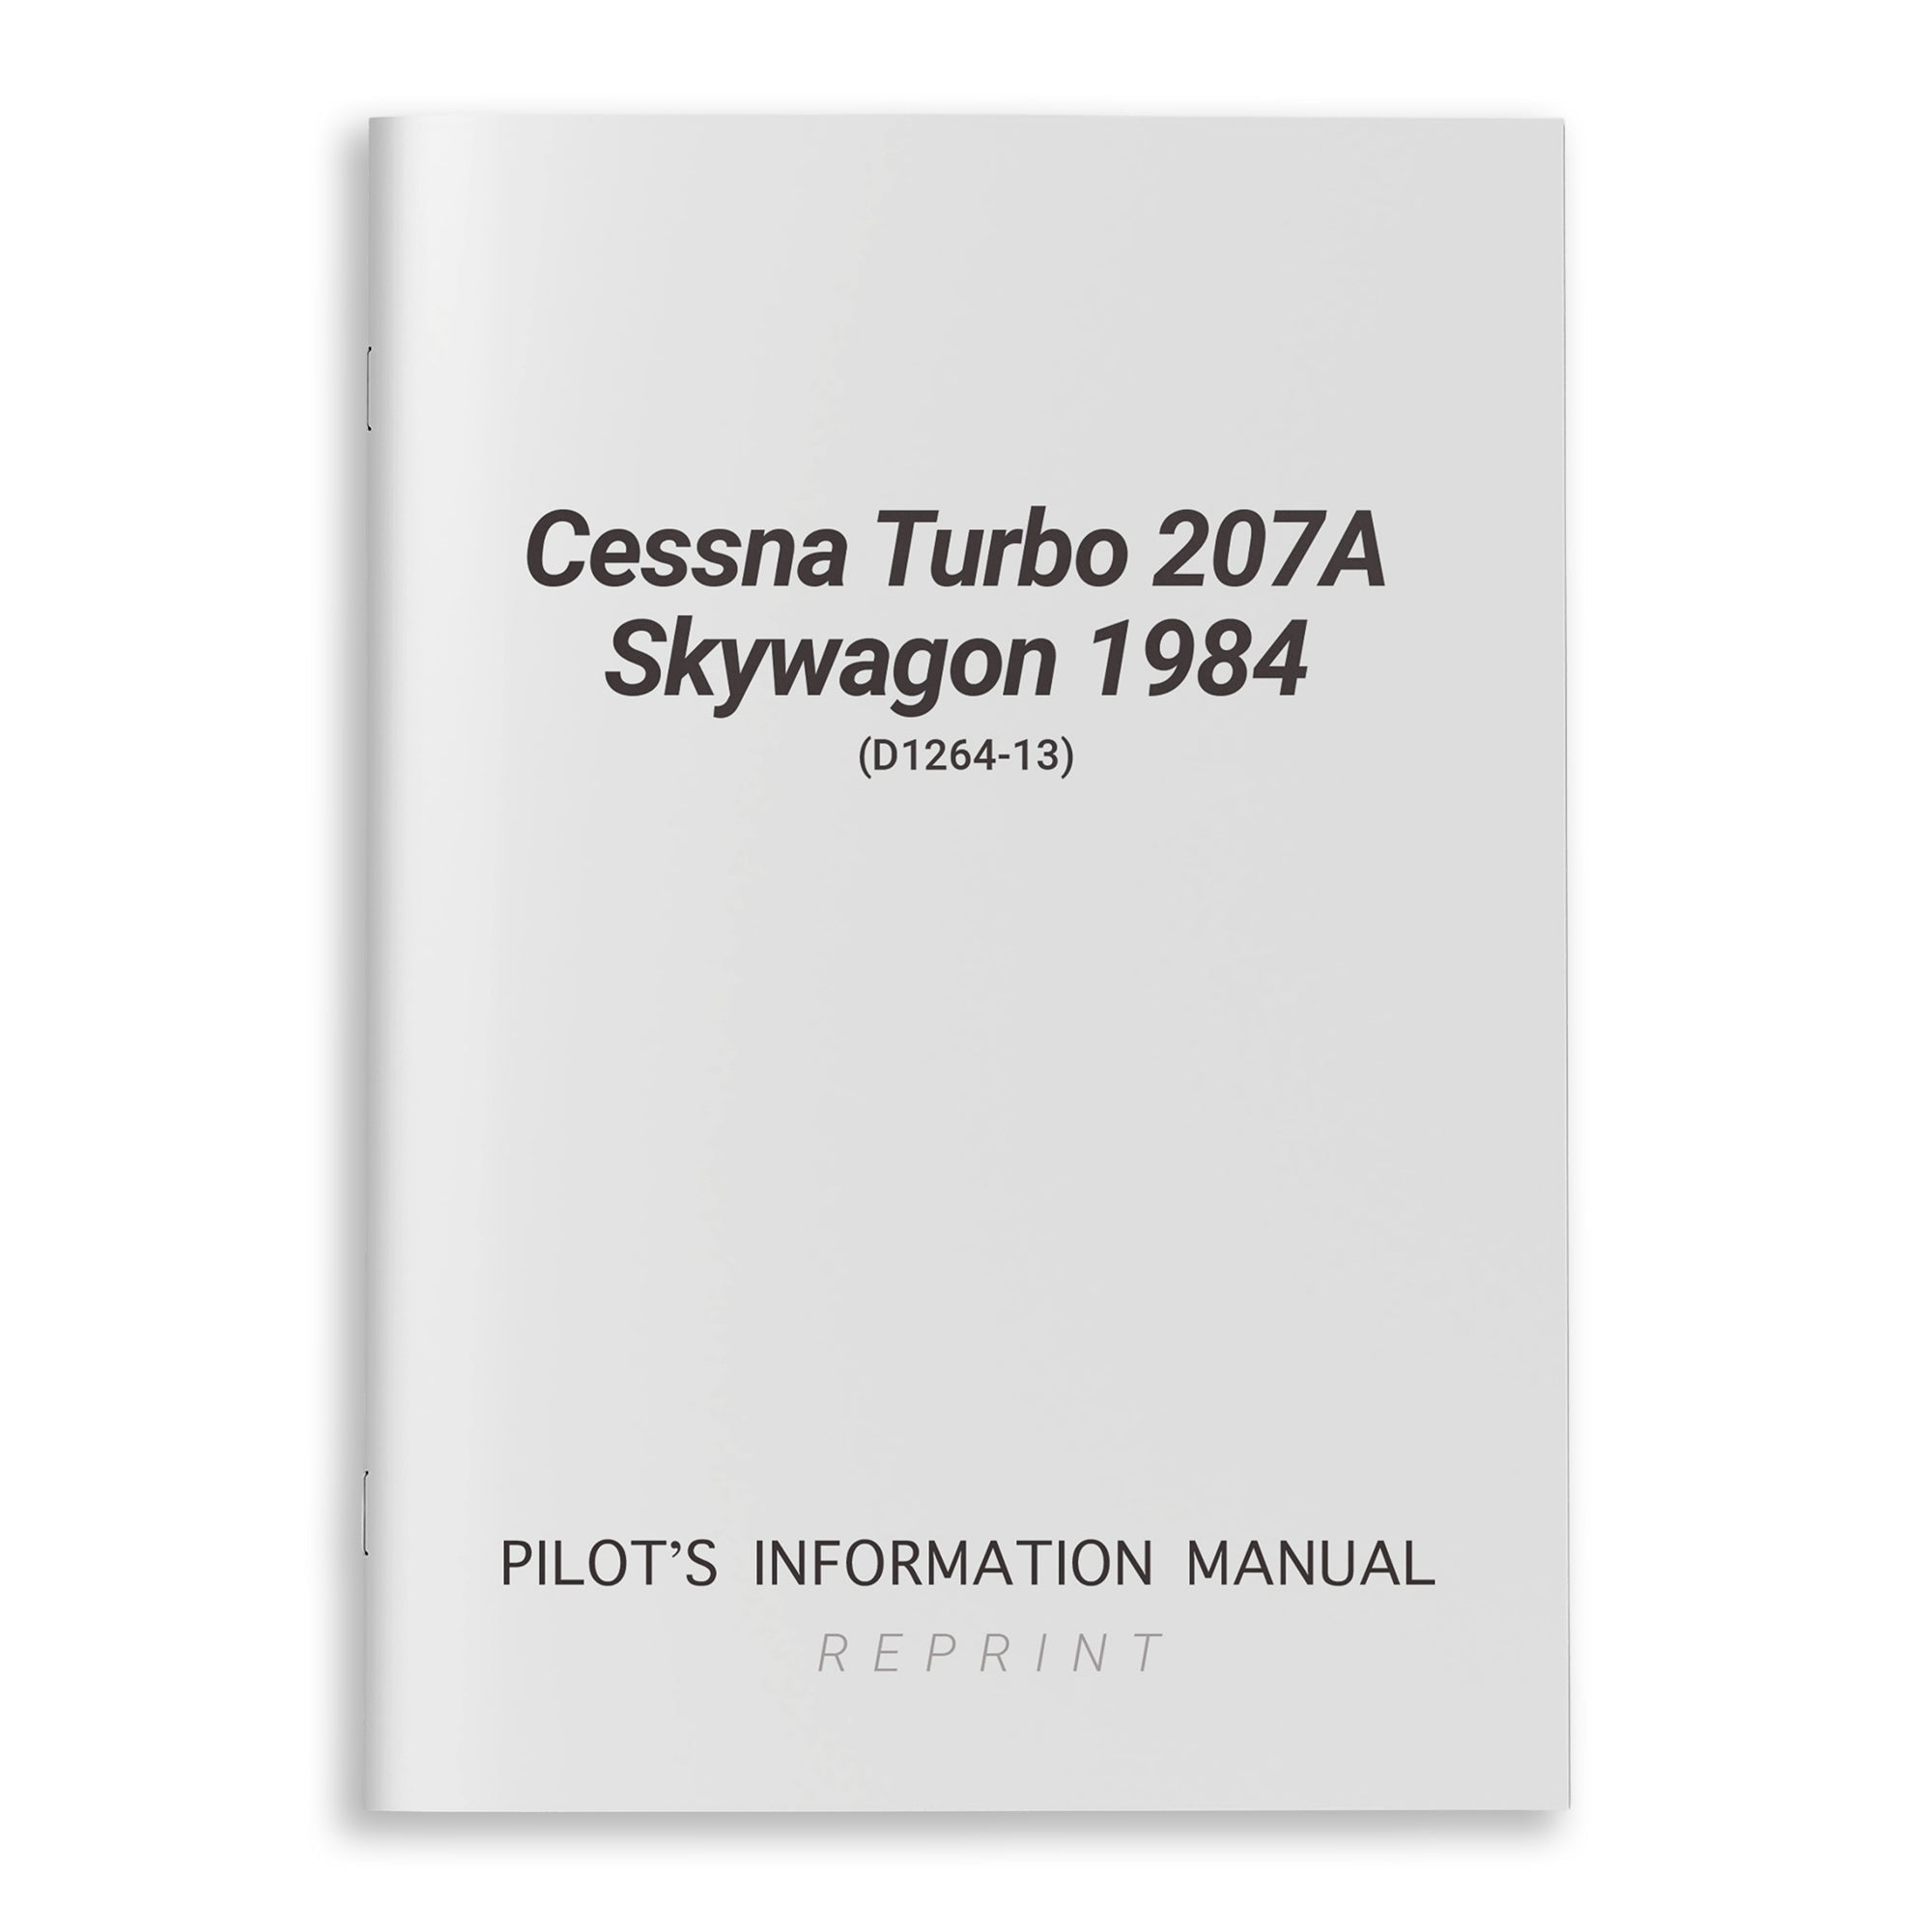 Cessna Turbo 207A Skywagon 1984 Pilot's Information Manual (D1264-13) - PilotMall.com